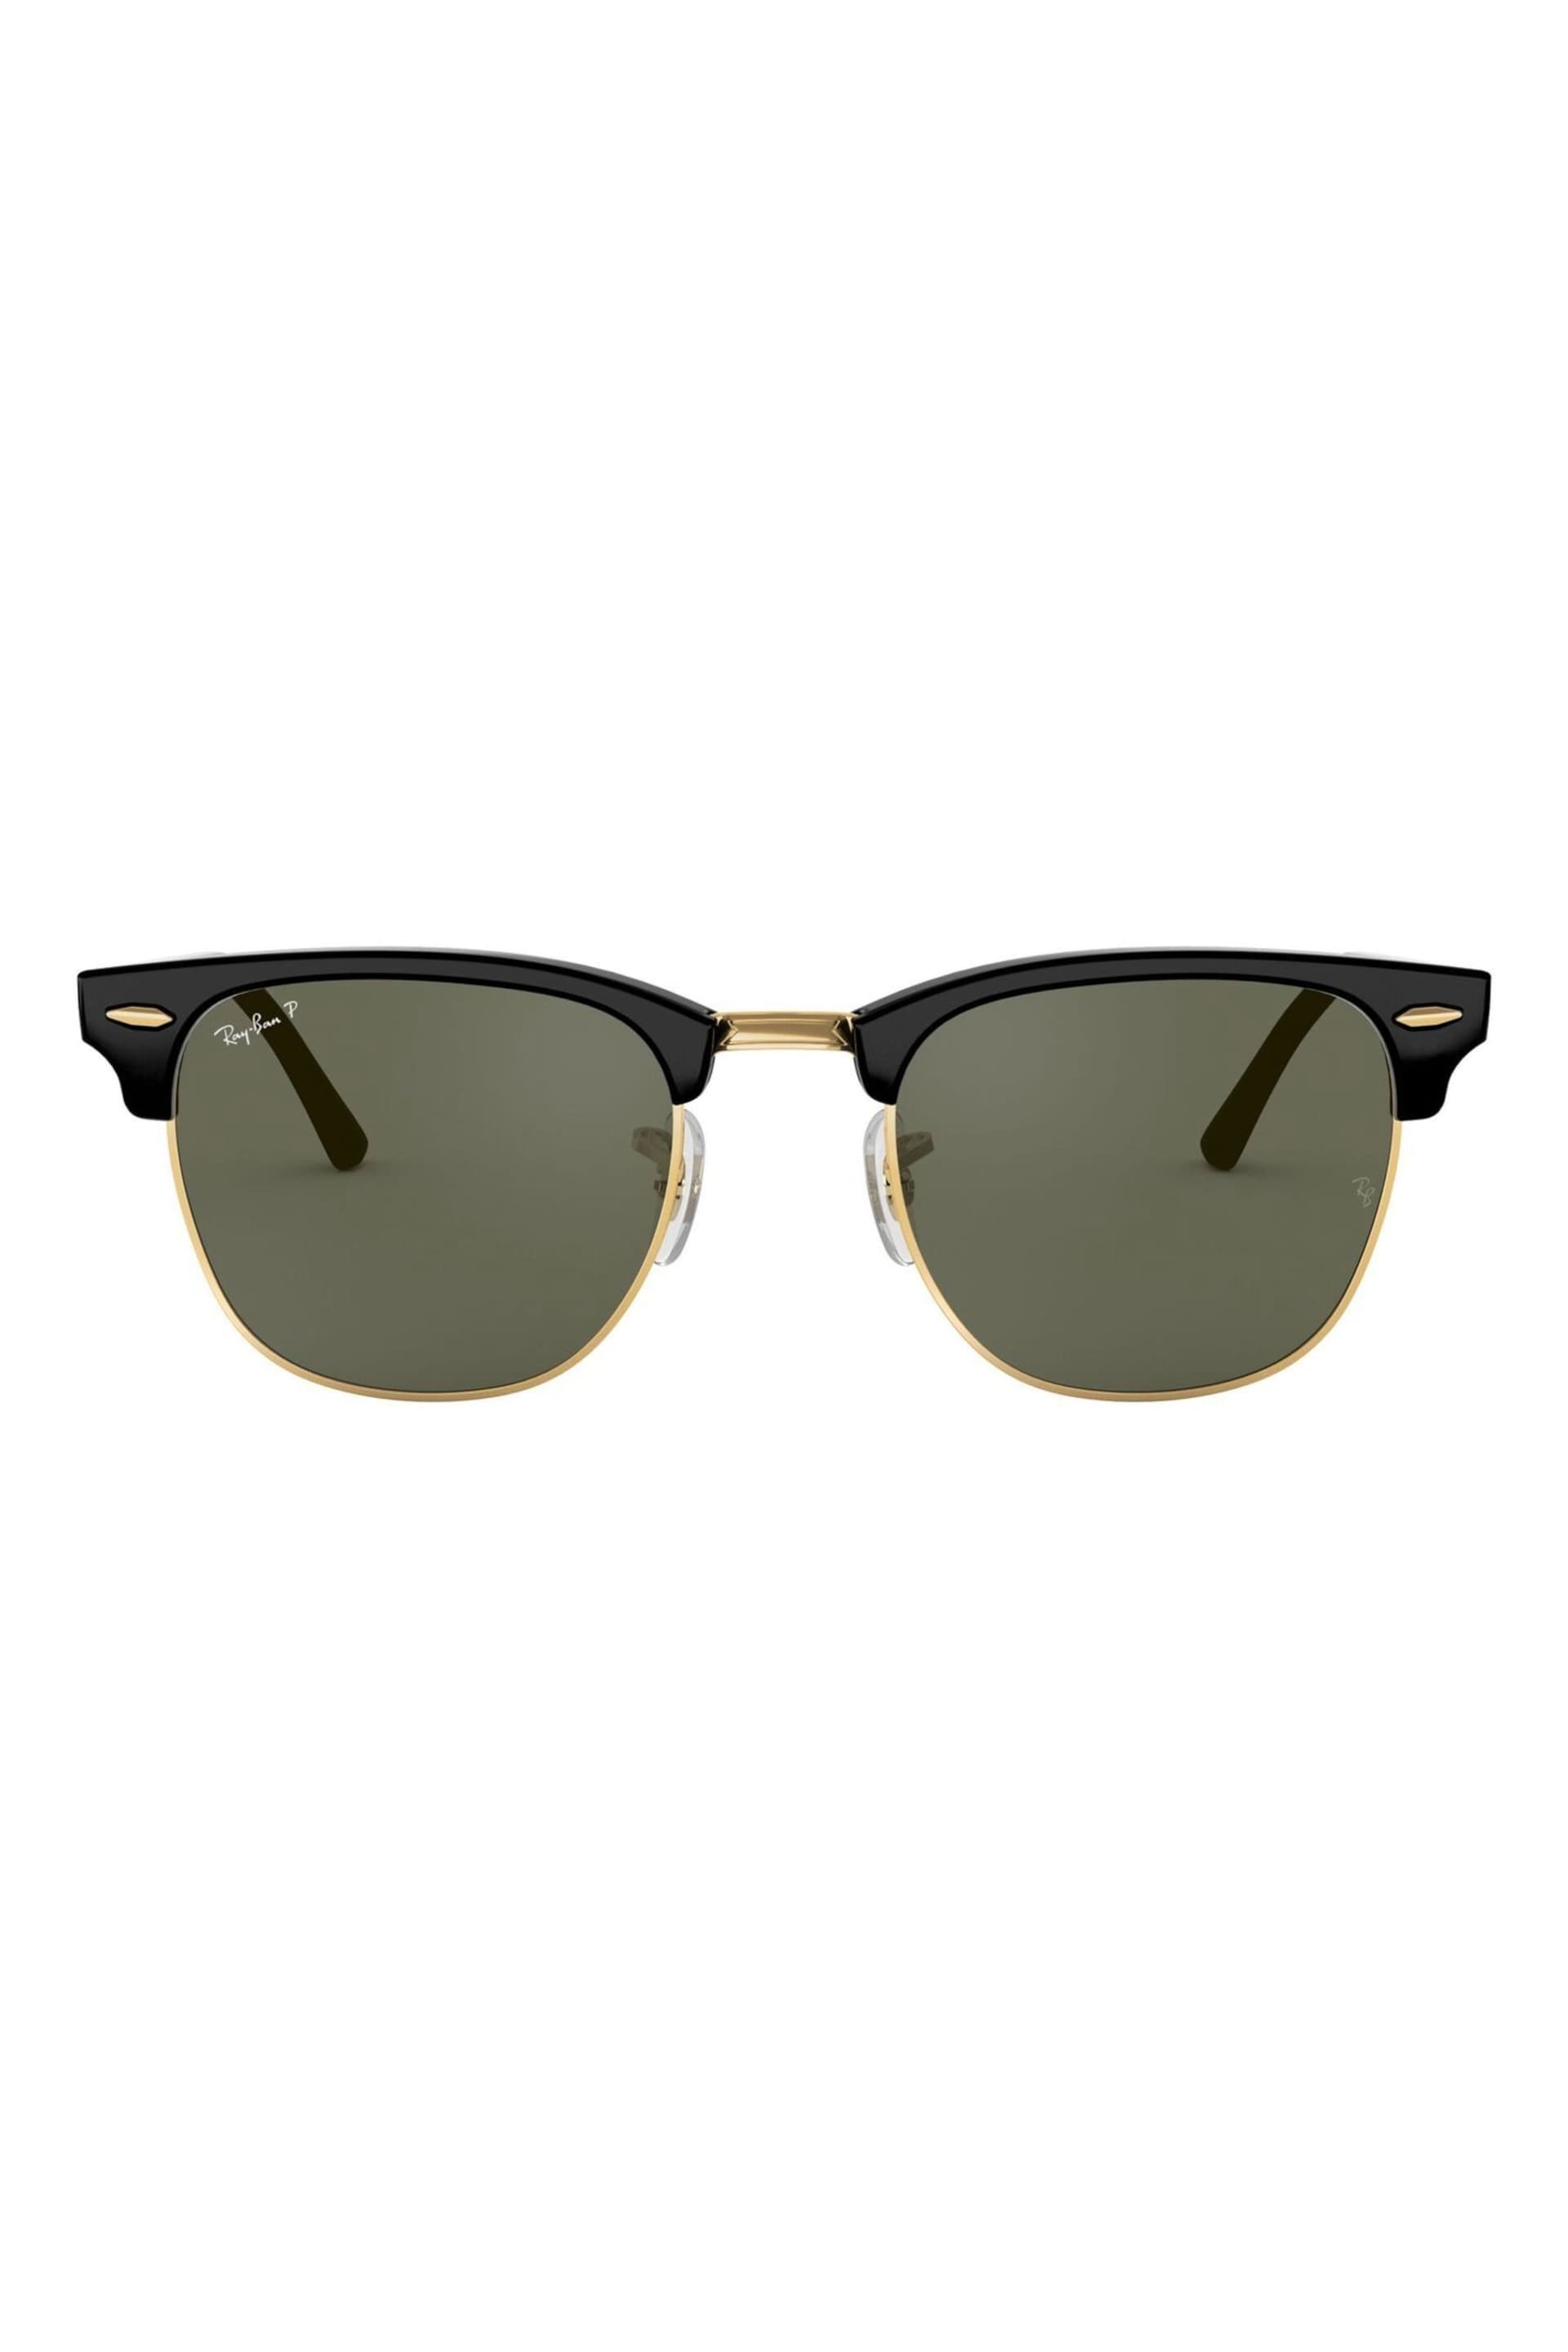 Ray-Ban Polarised Clubmaster Sunglasses - Image 1 of 12